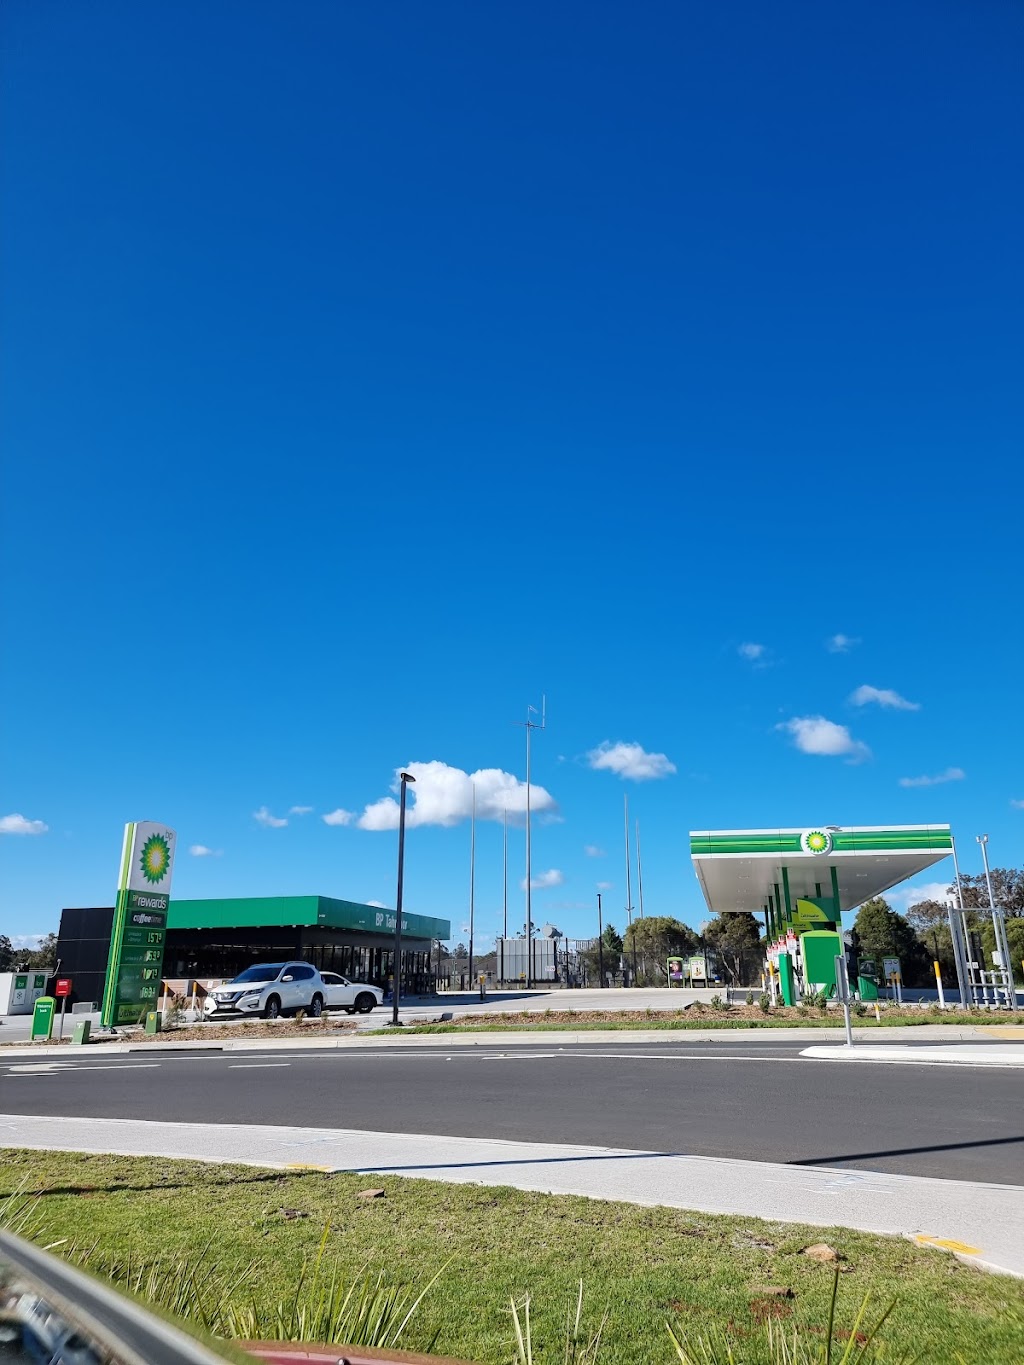 BP Tahmoor | gas station | 2710 Remembrance Driveway, Tahmoor NSW 2573, Australia | 0272281375 OR +61 2 7228 1375